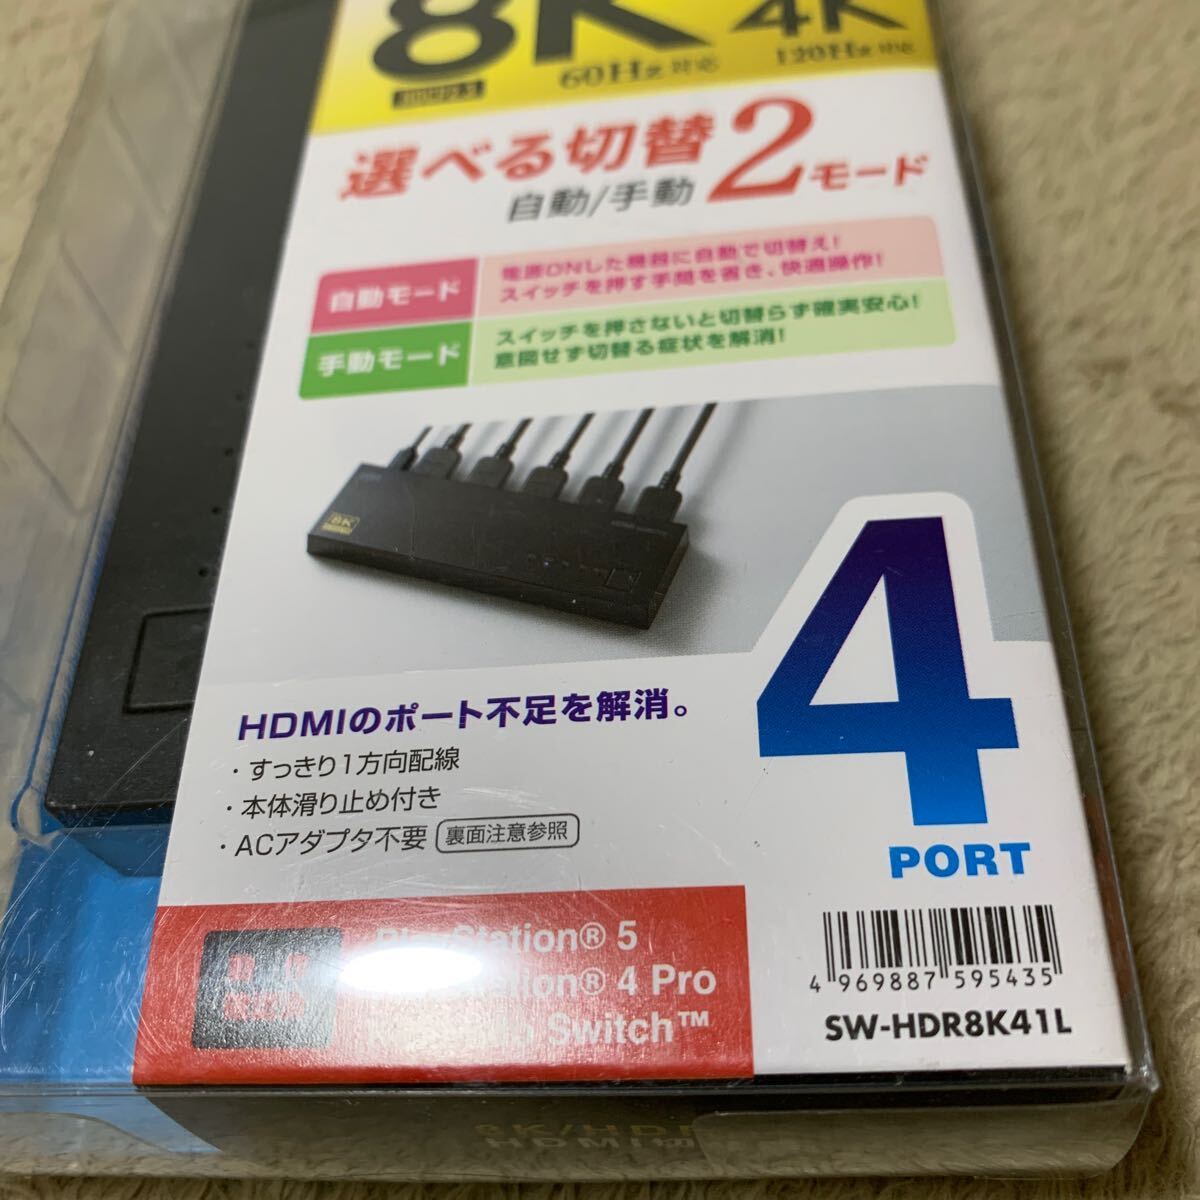 603t1534☆ サンワサプライ(Sanwa Supply) 8K対応HDMI切替器(4入力・1出力) SW-HDR8K41L